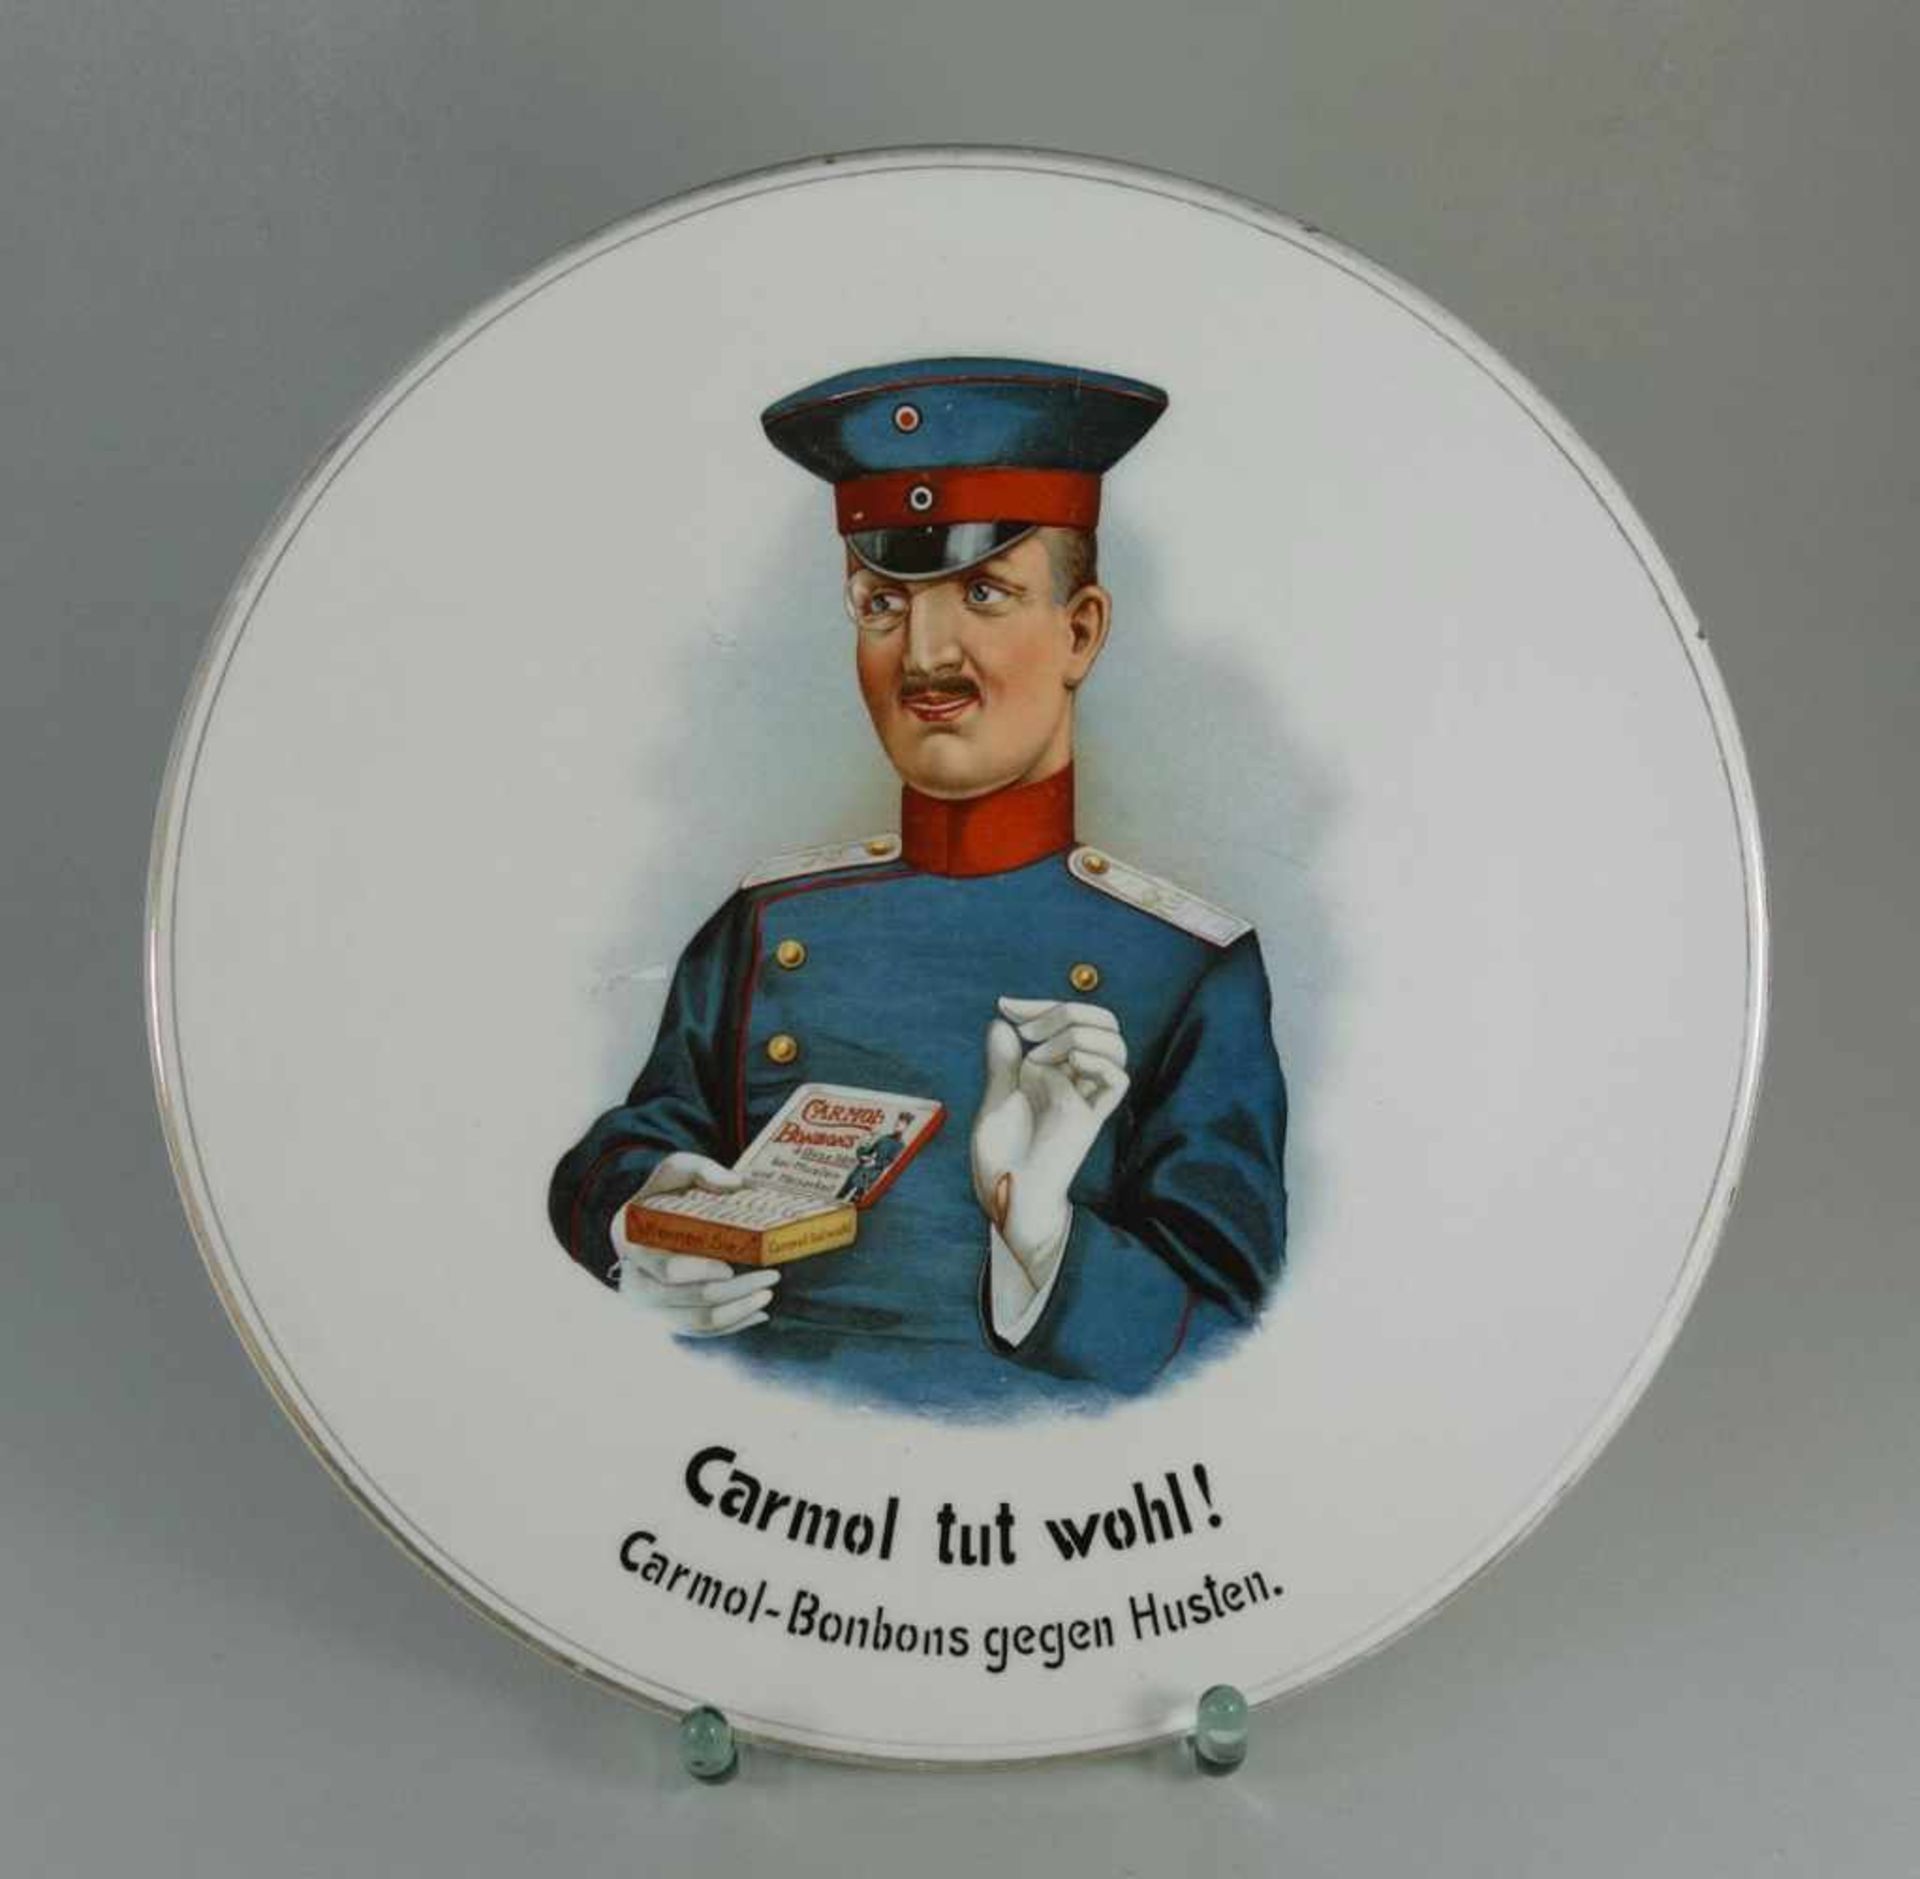 Reklame-Wandteller "Carmol tut wohl !", um 1910/20"Carmol-Bonbons gegen Husten", Keramik, farbig